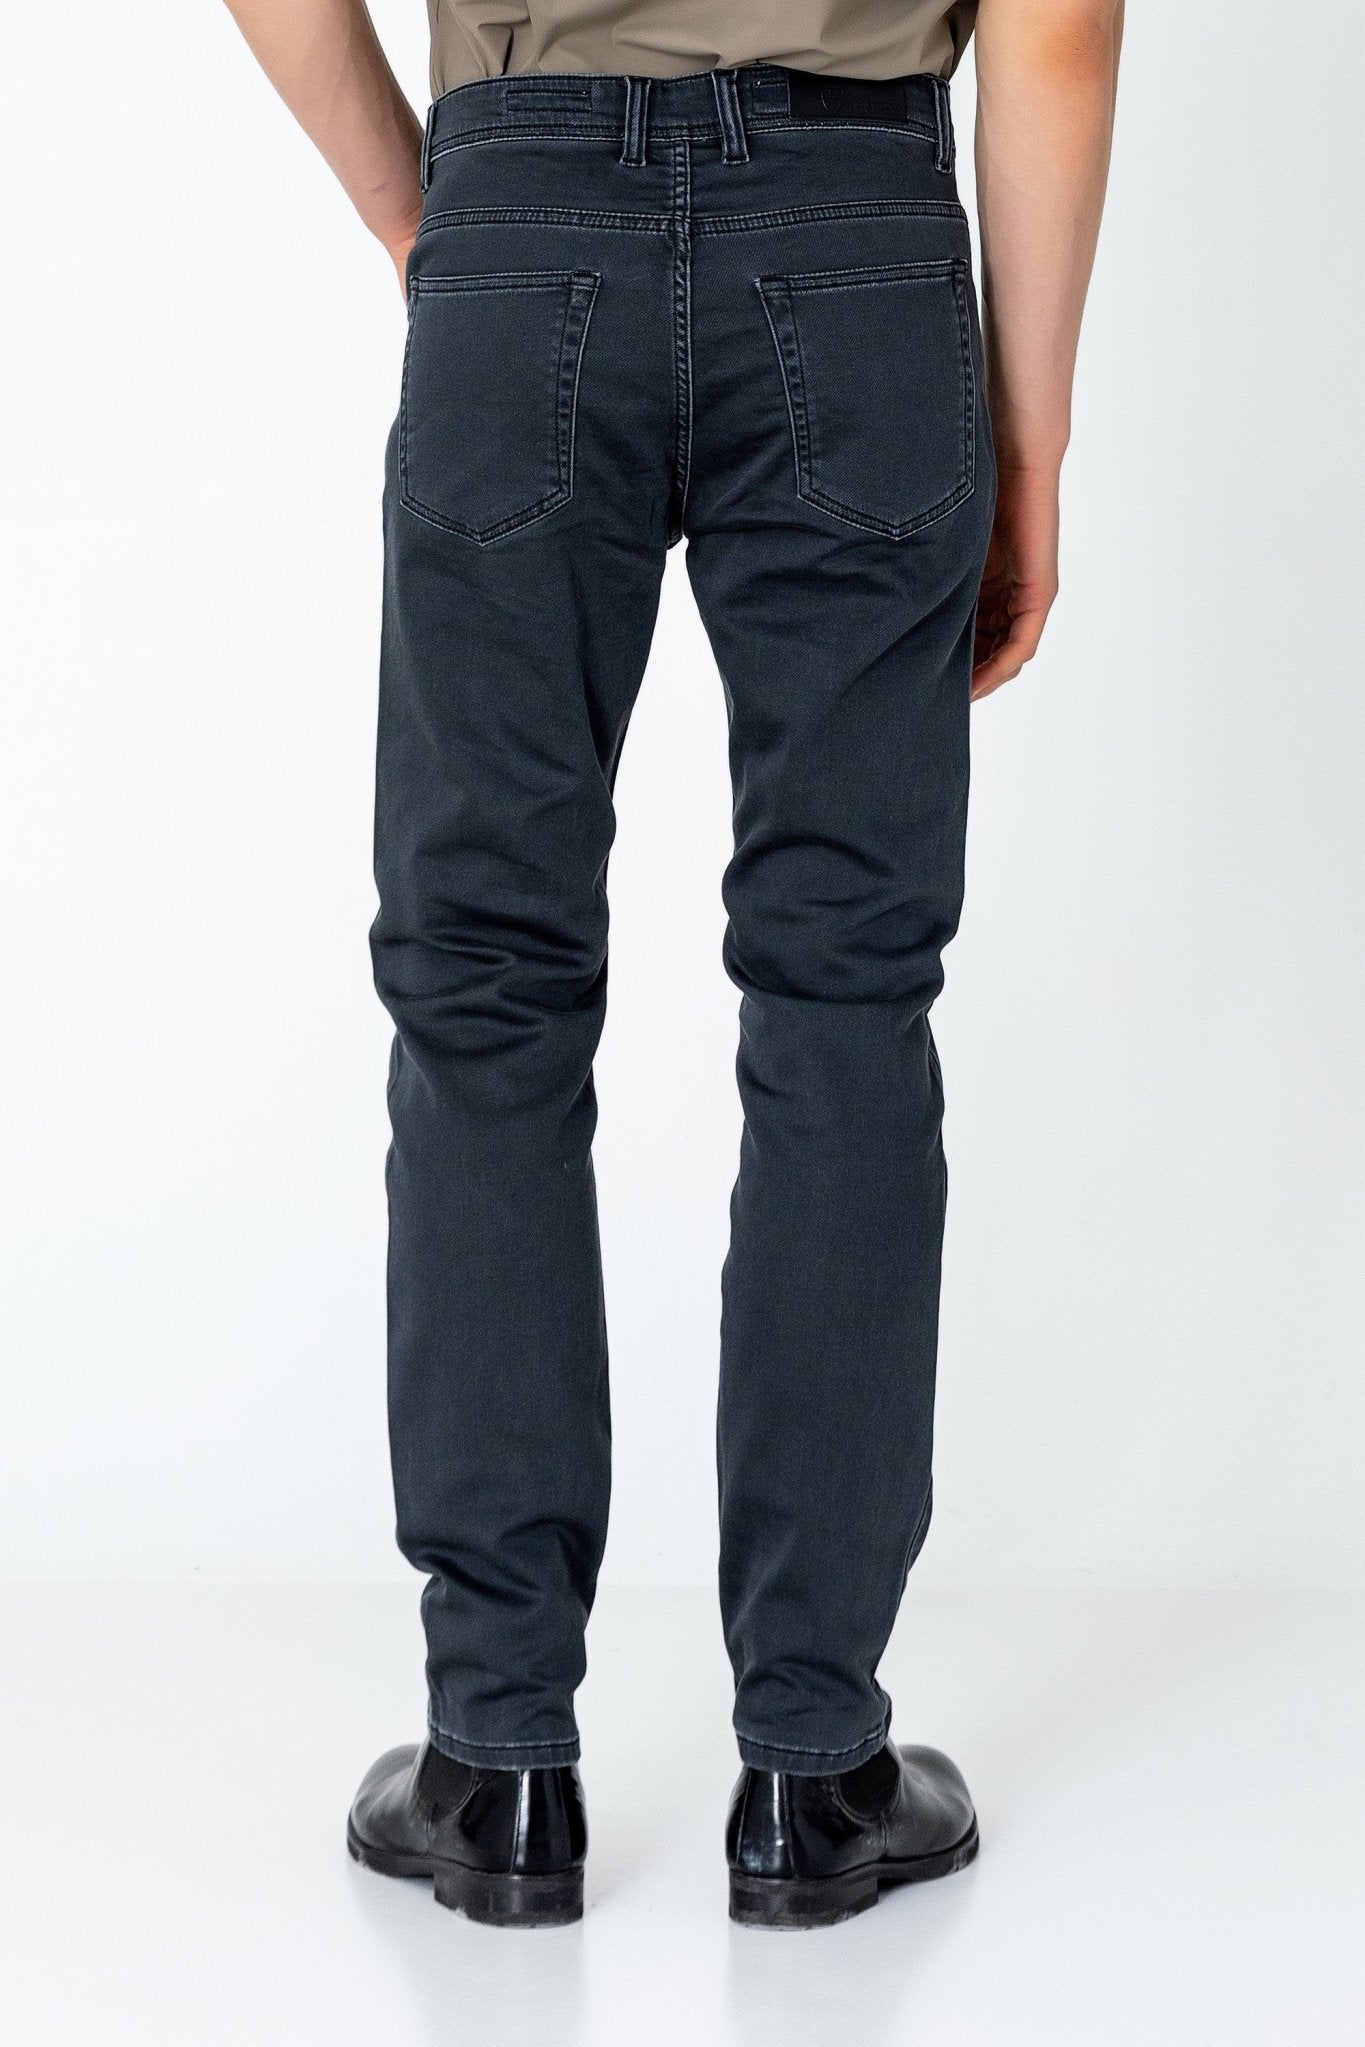 Super Soft 5-pocket Style Pants - Anthracite - Ron Tomson